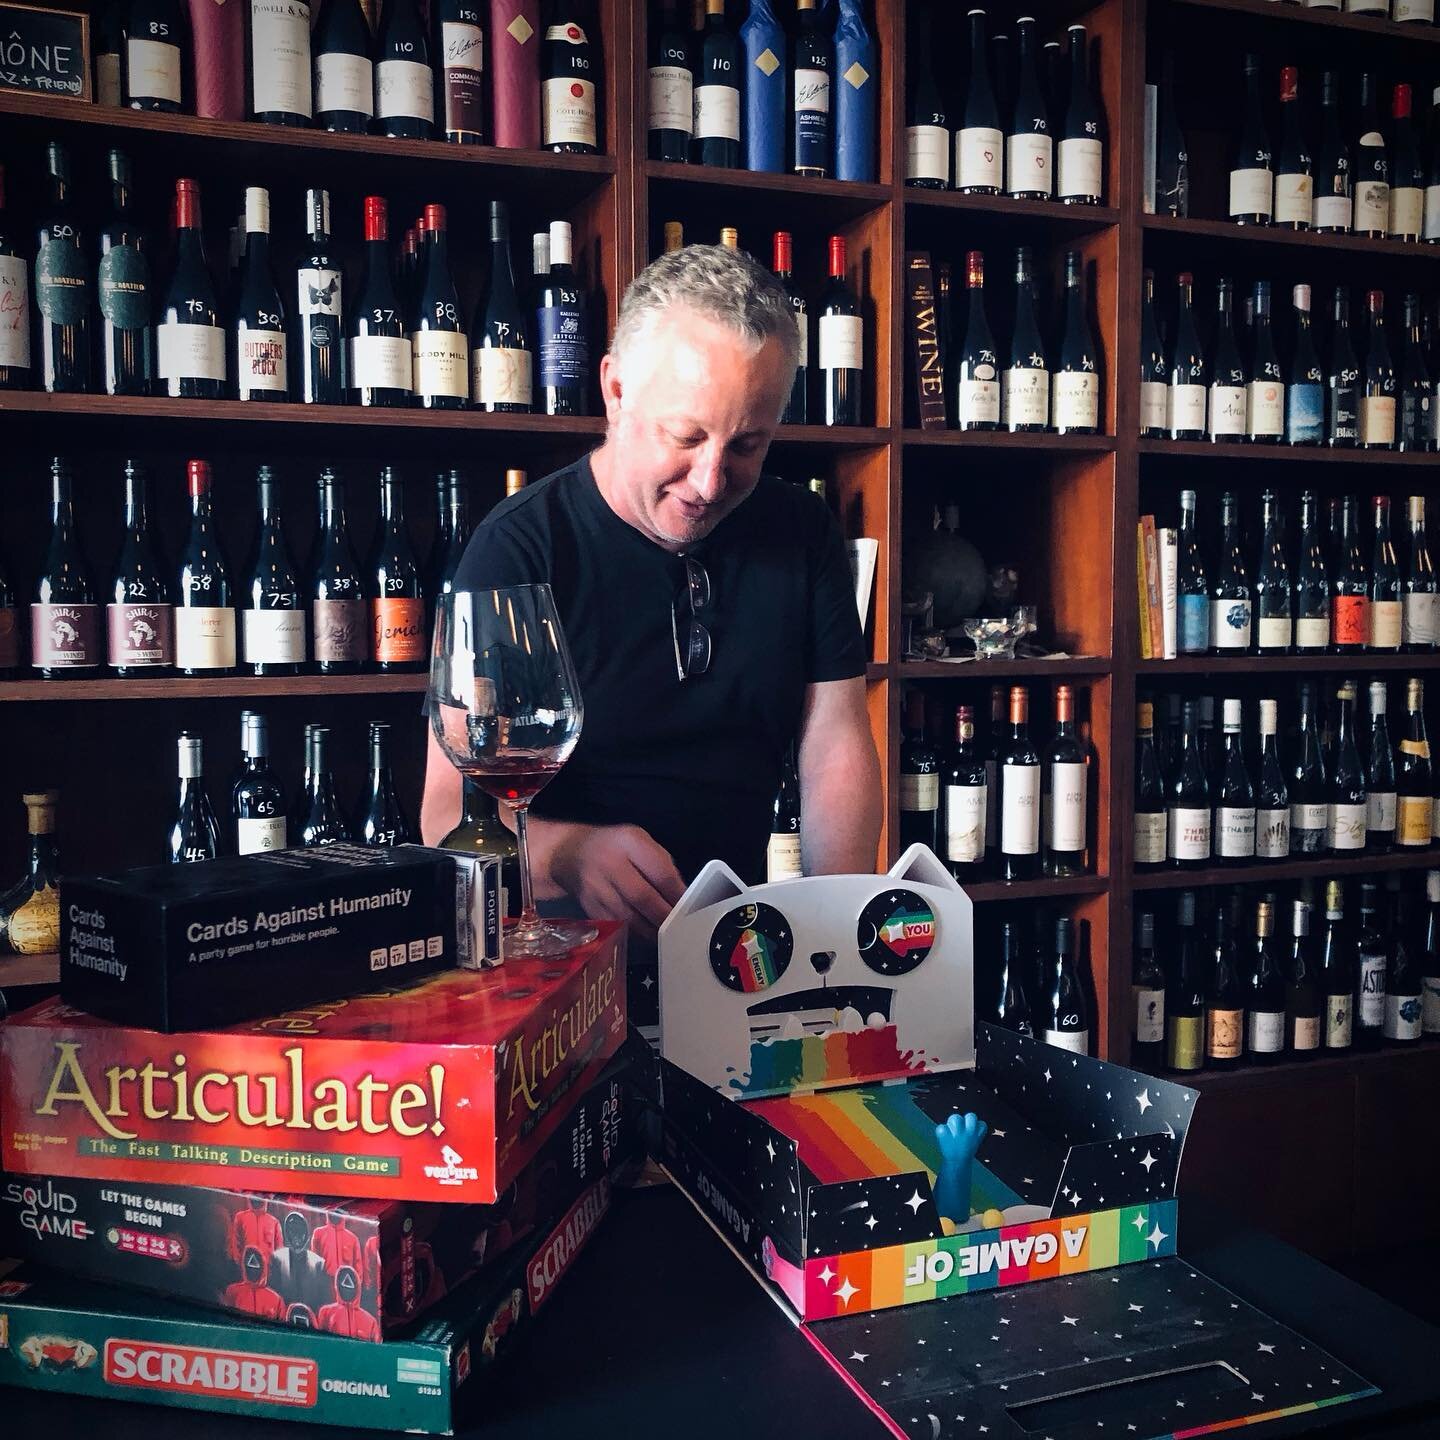 Wine bar ✅
Board games ✅
Tony ✅